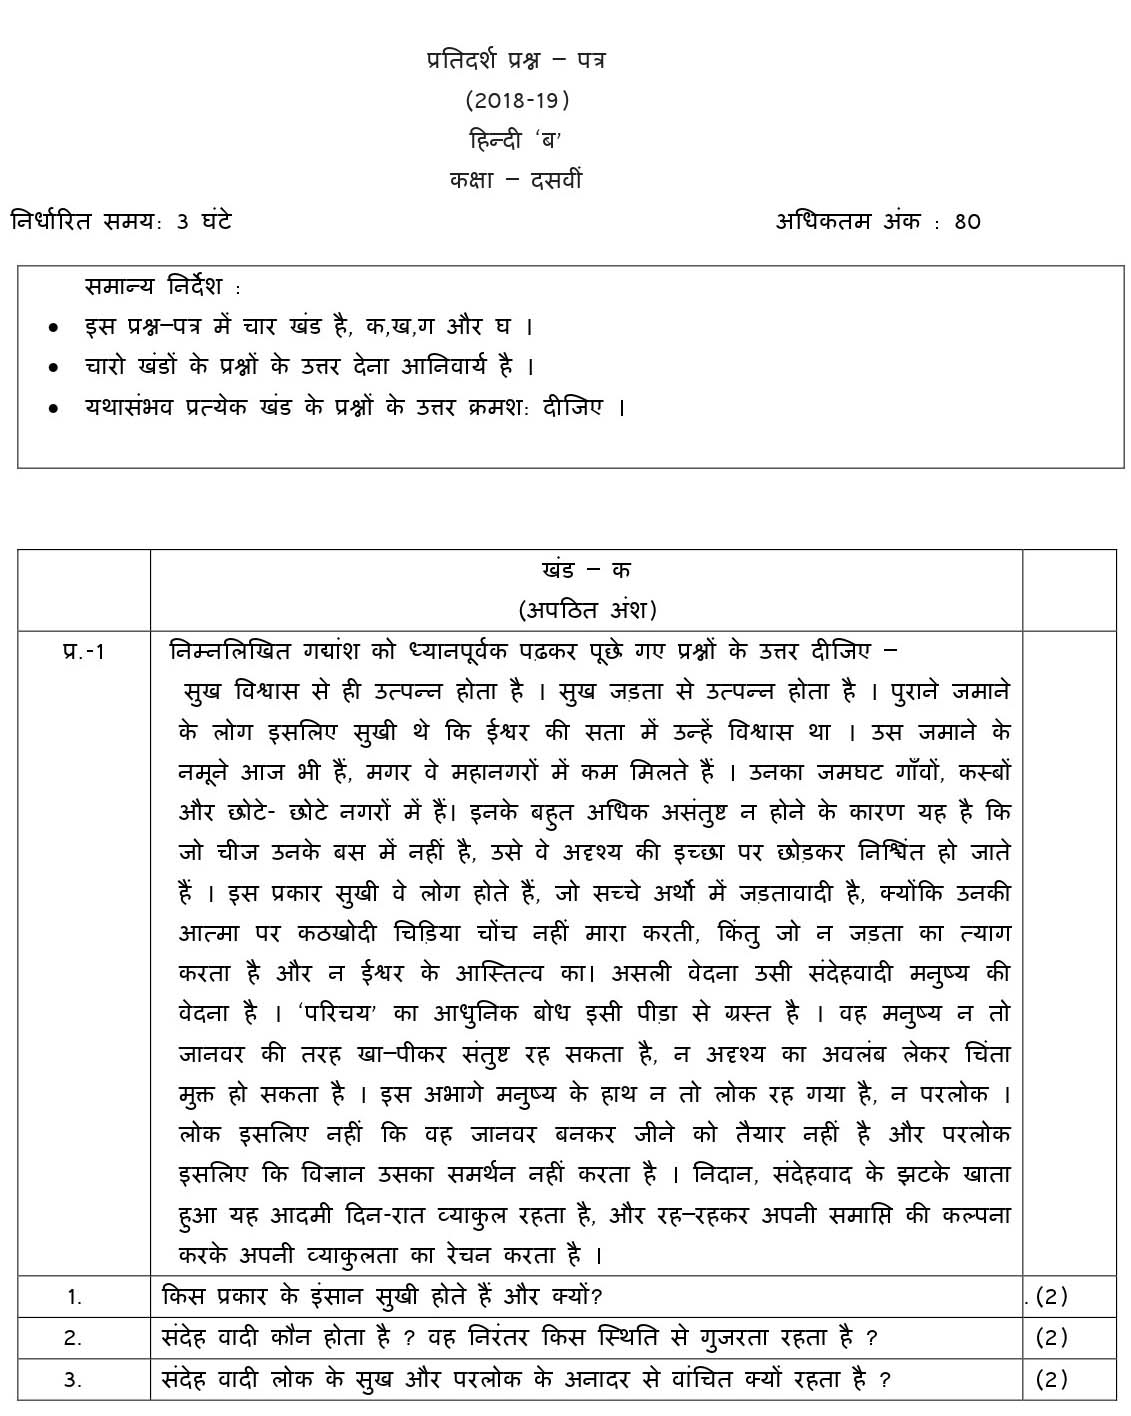 Hindi B CBSE Class X Sample Question Paper 2018-19 - Image 1